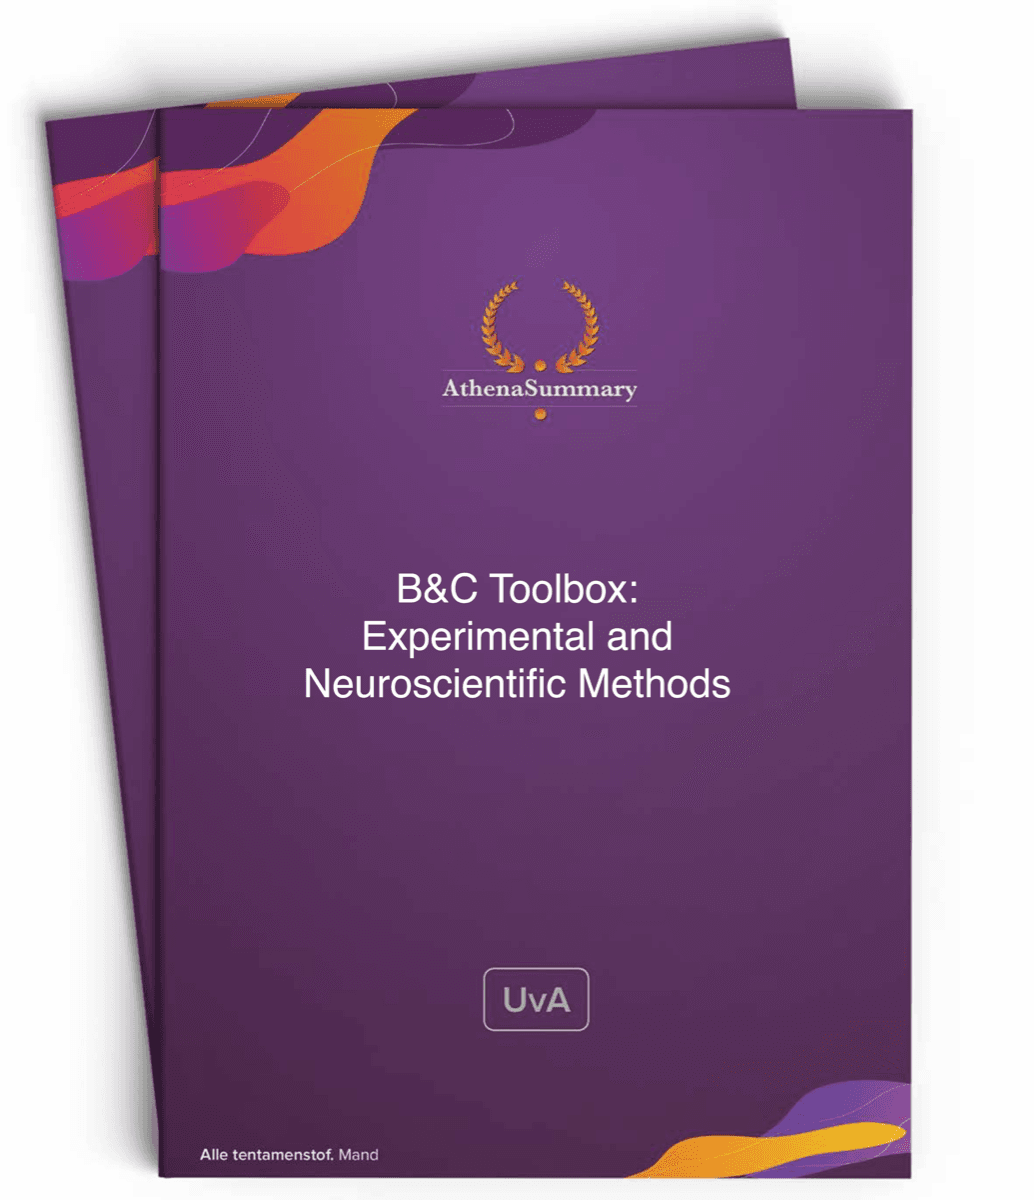 Literature Summary: B&C Toolbox: Experimental and Neuroscientific Methods